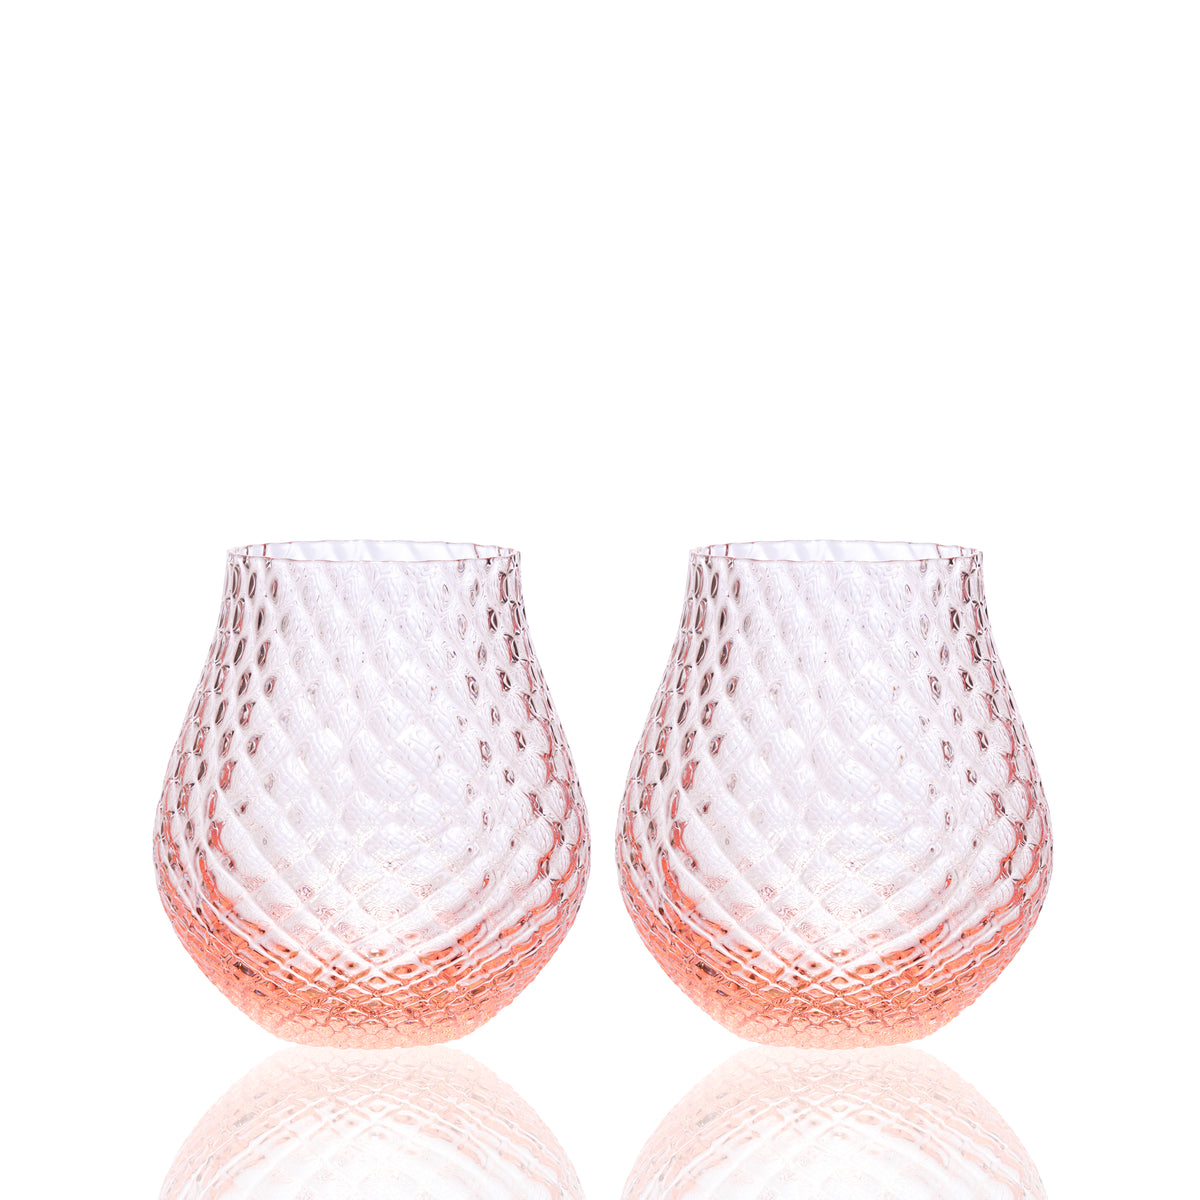 Phoebe rose pink crystal stemless tulip wine glasses from Caskata.